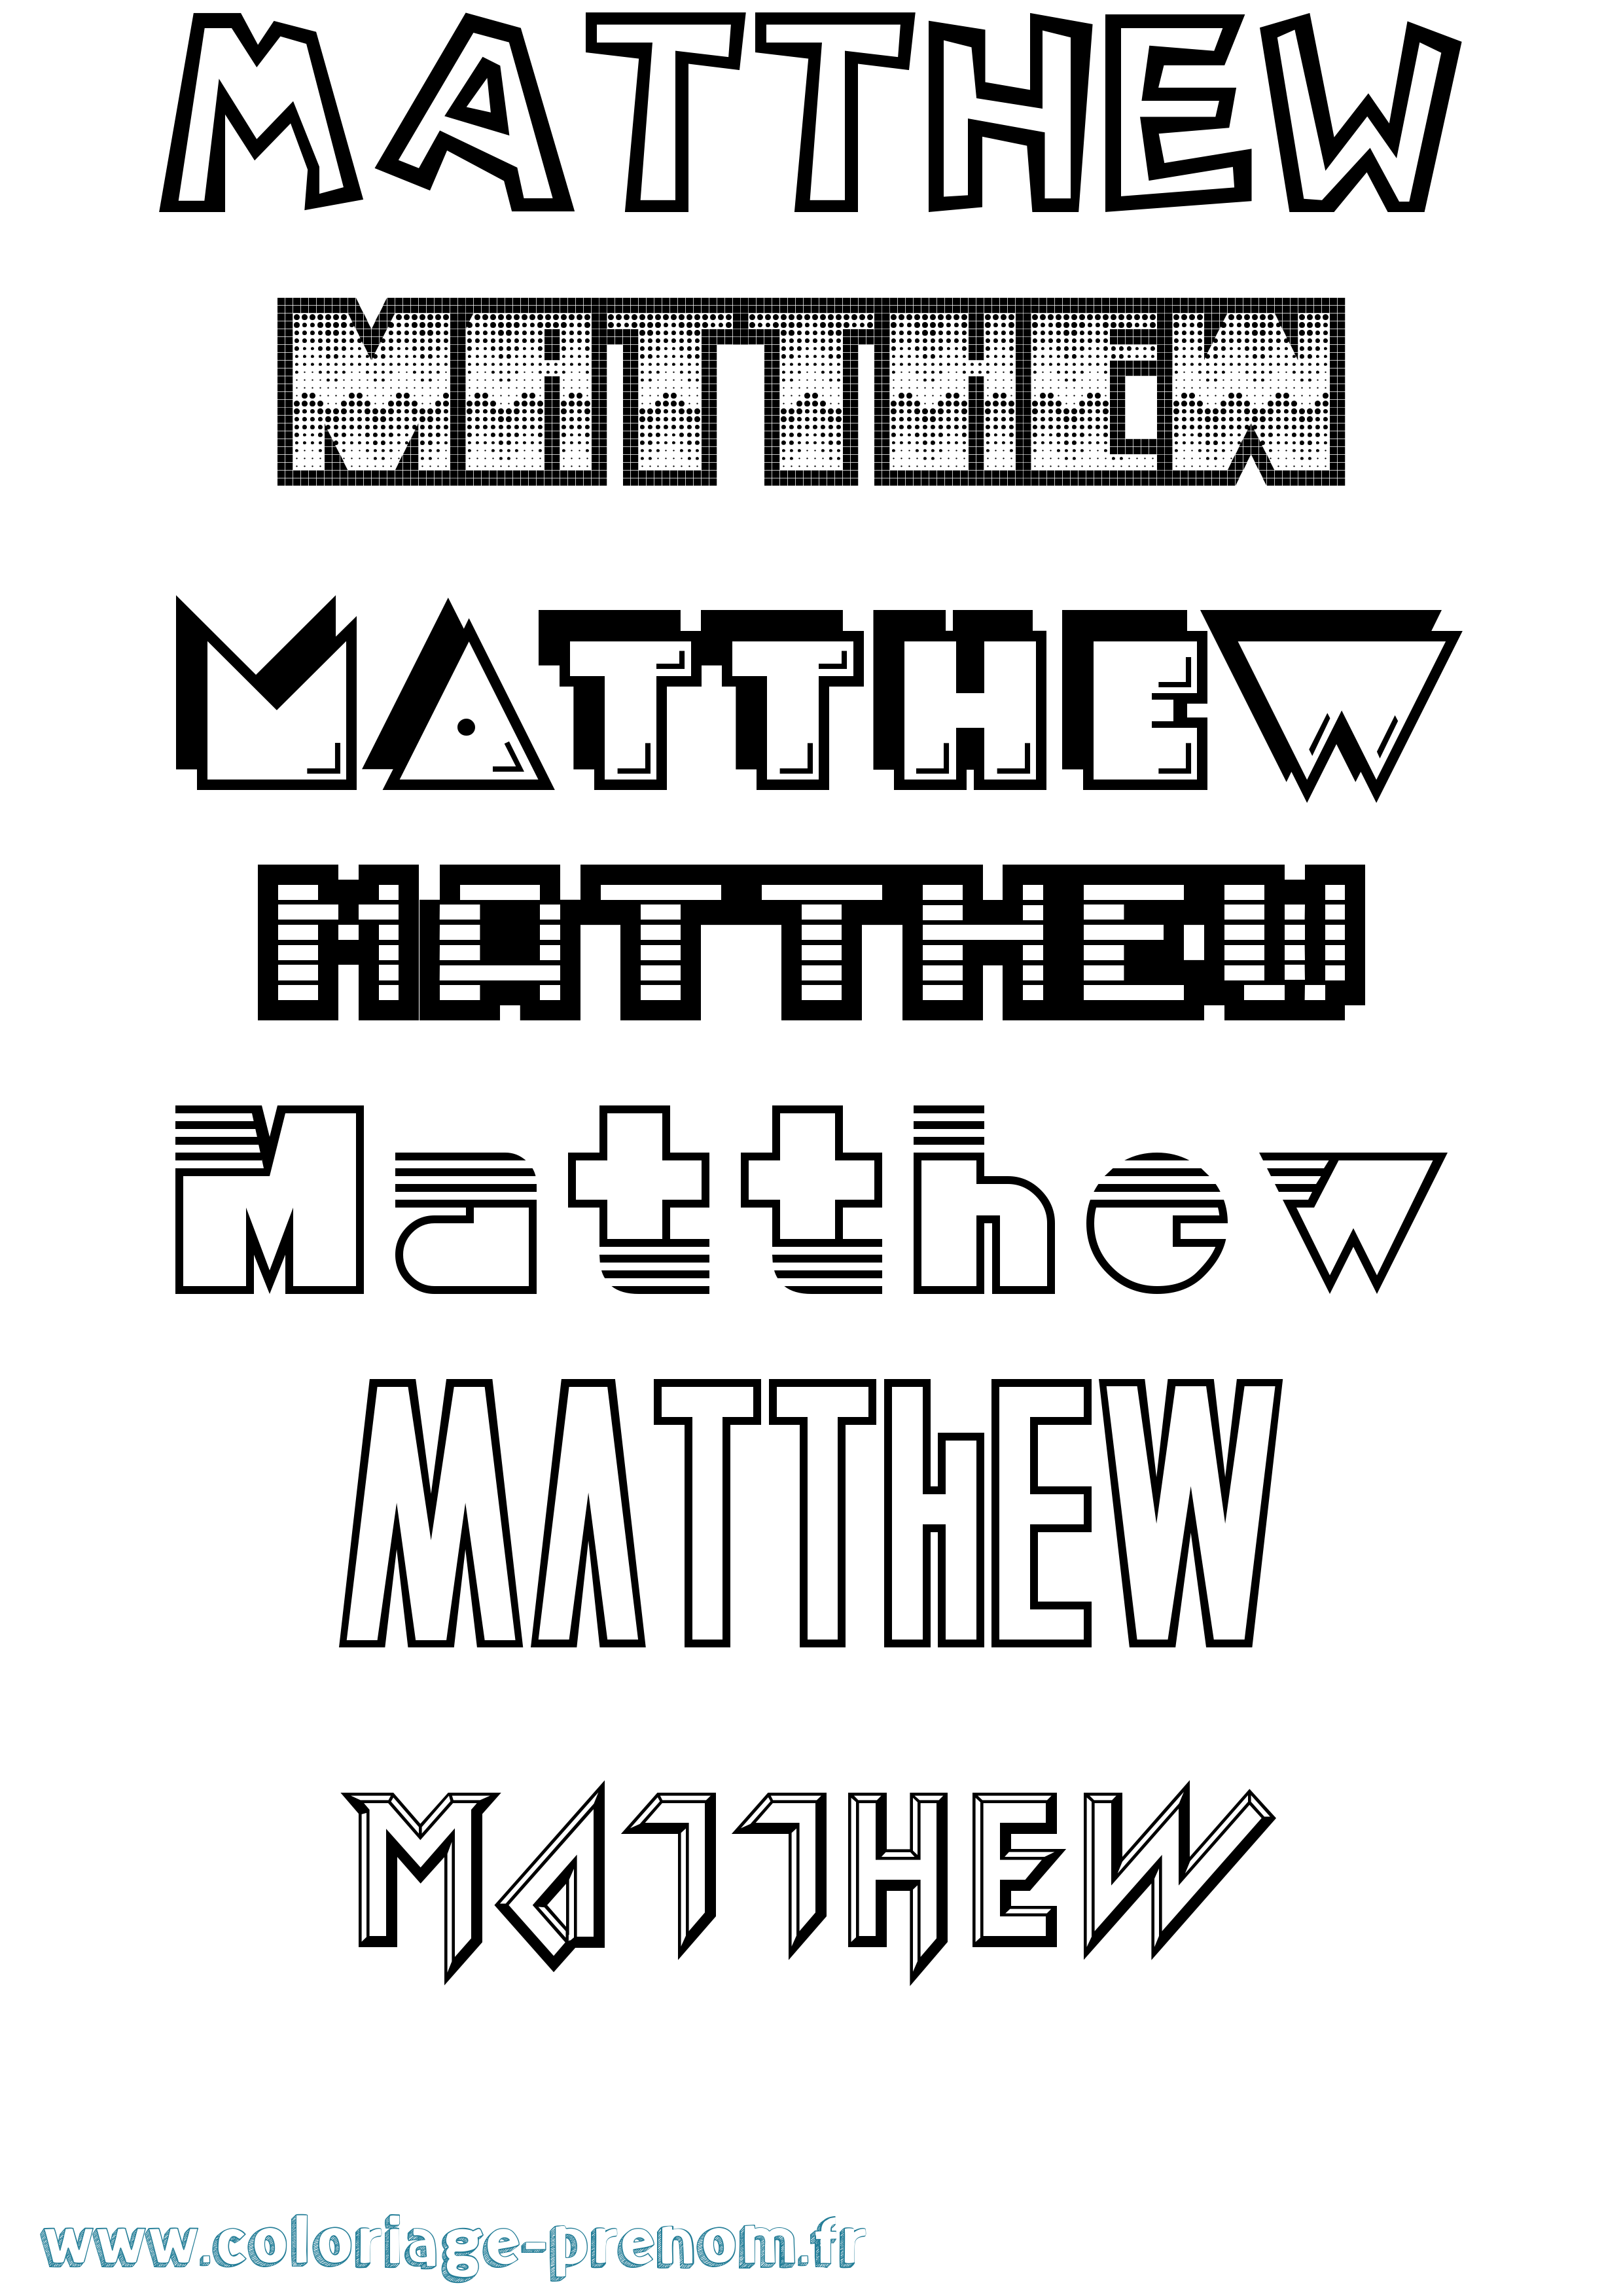 Coloriage prénom Matthew